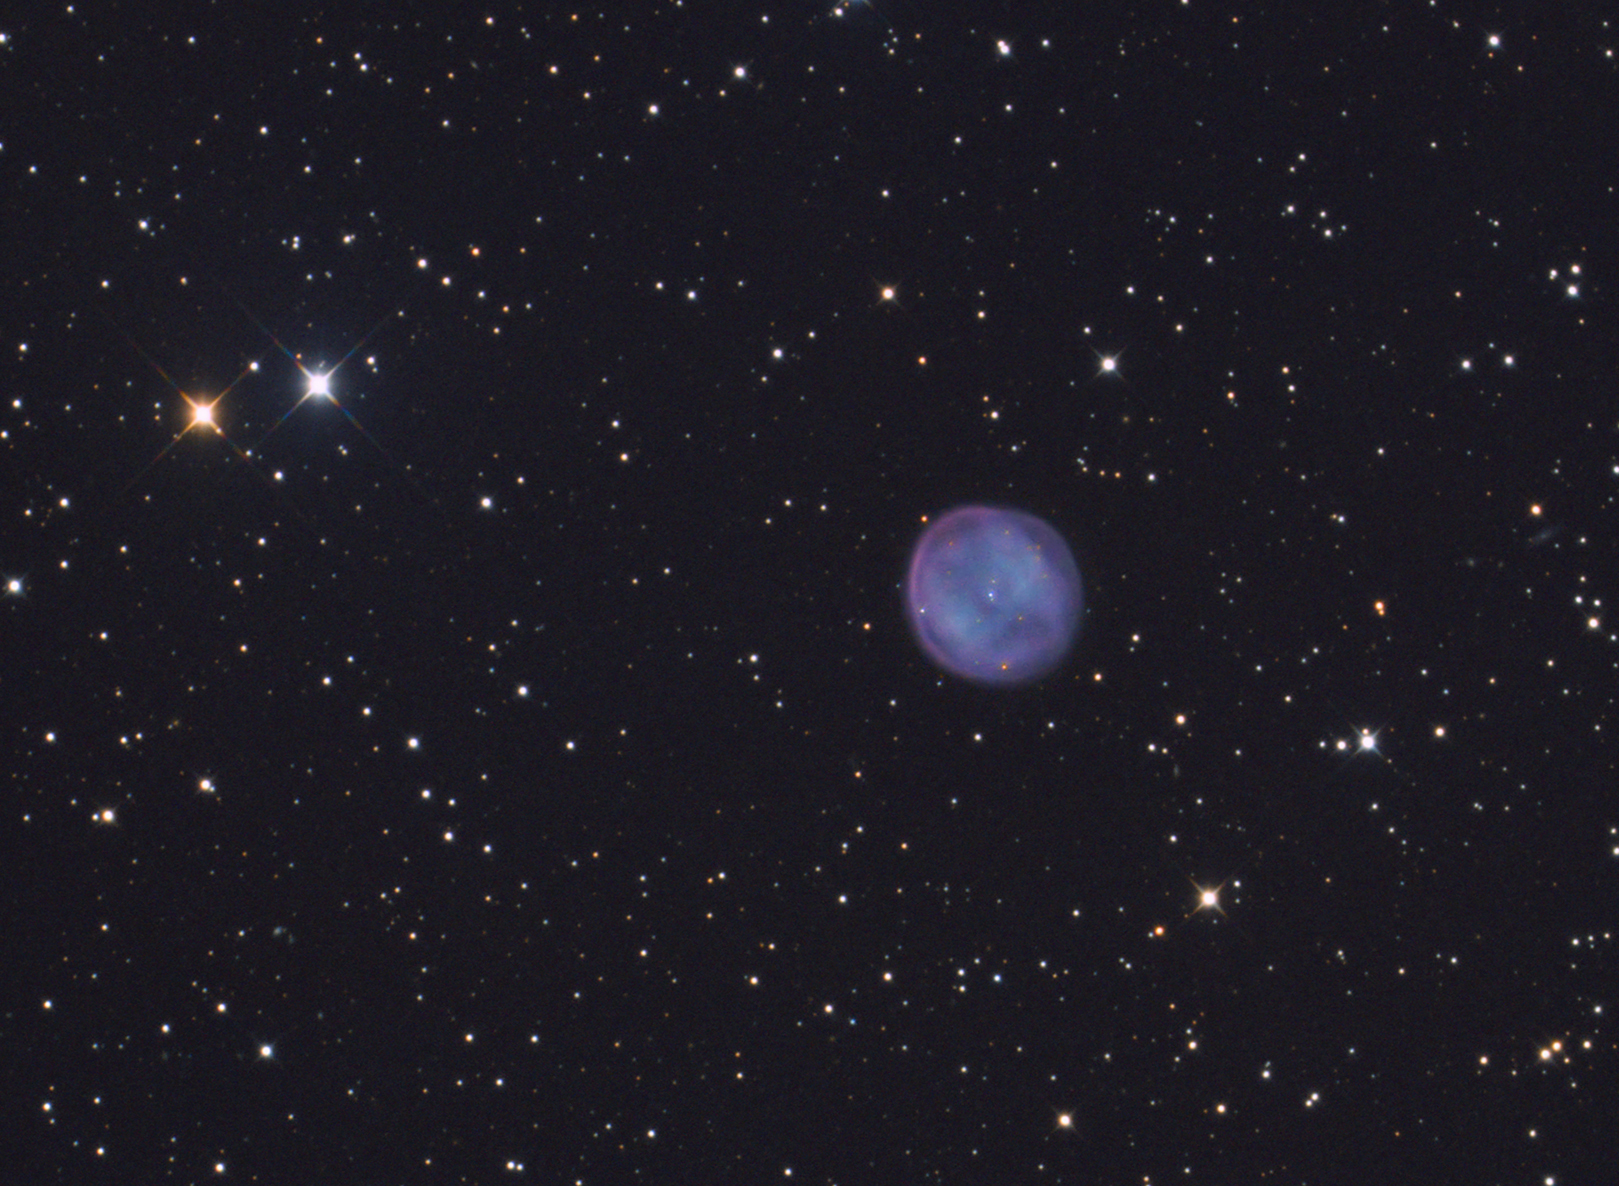 Planetary nebula K1-22 in Hydra